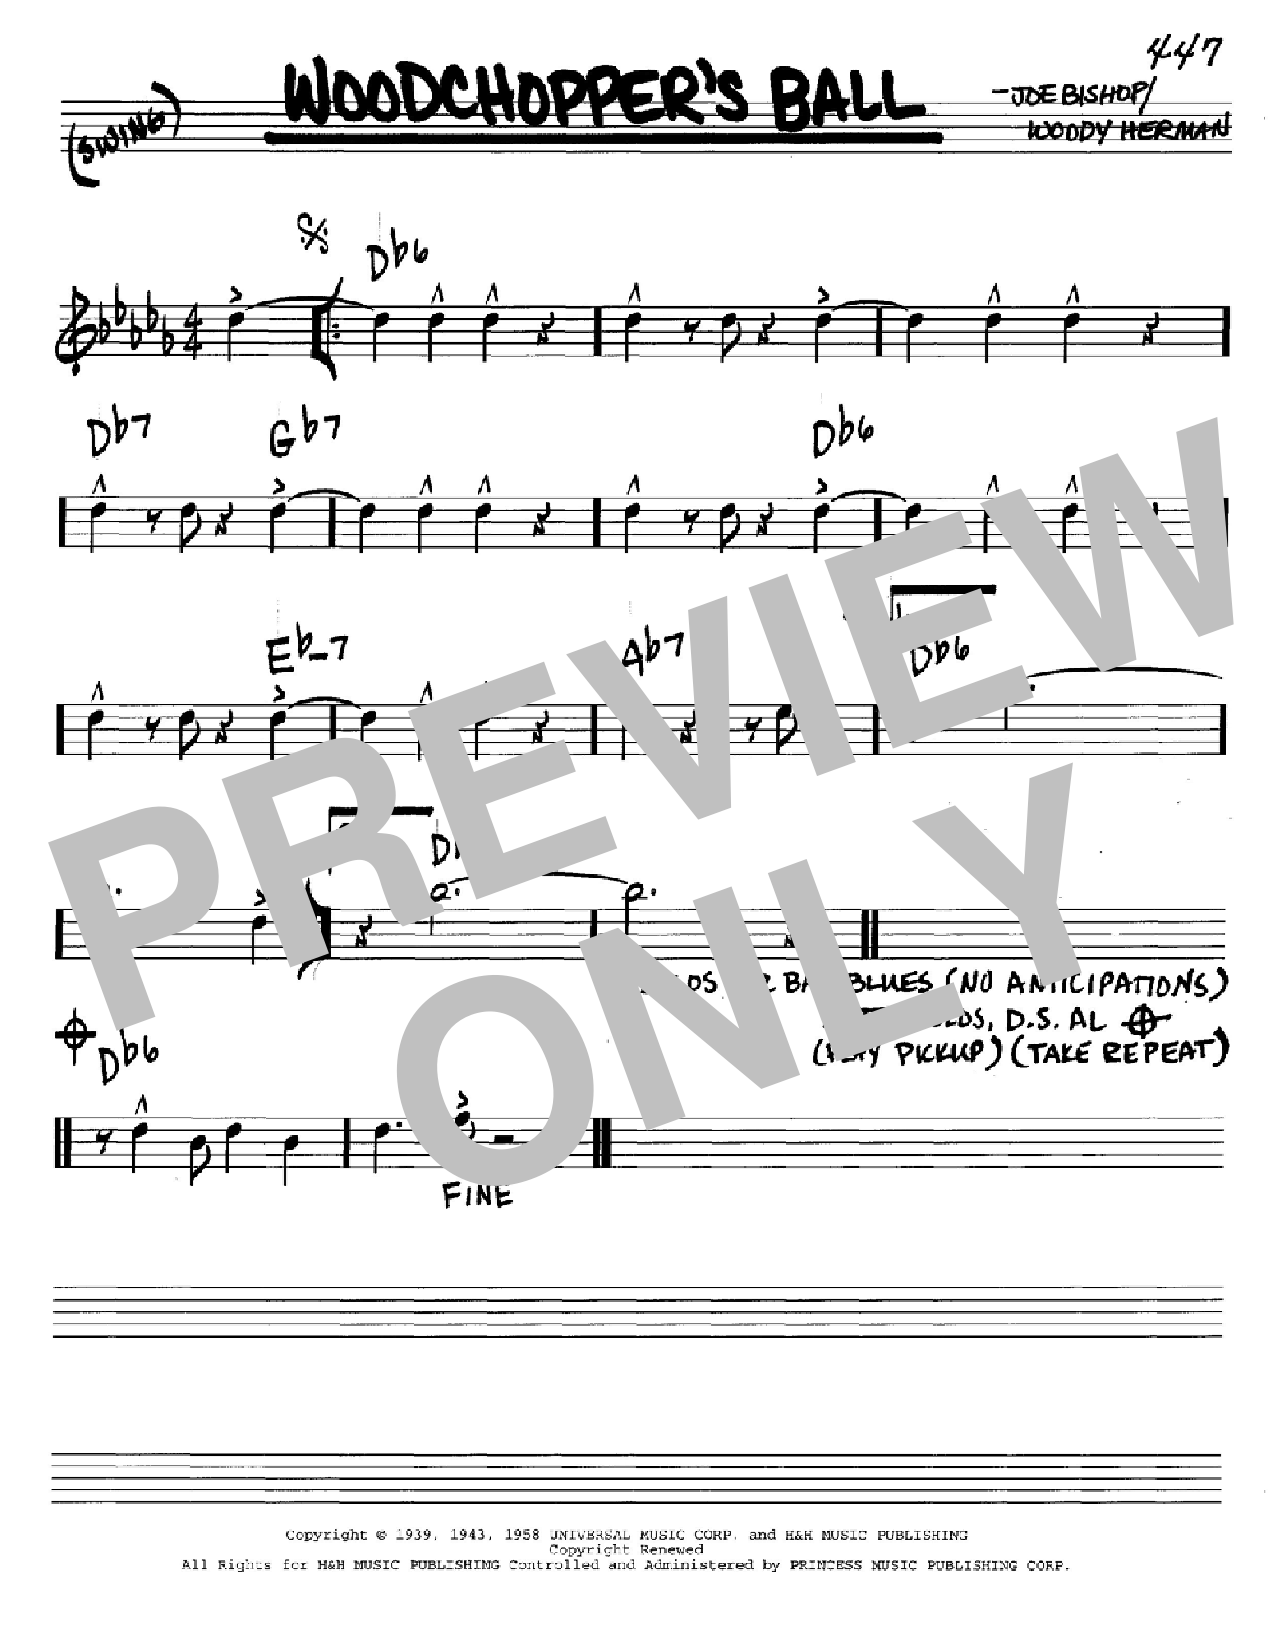 Download Woody Herman Woodchopper's Ball Sheet Music